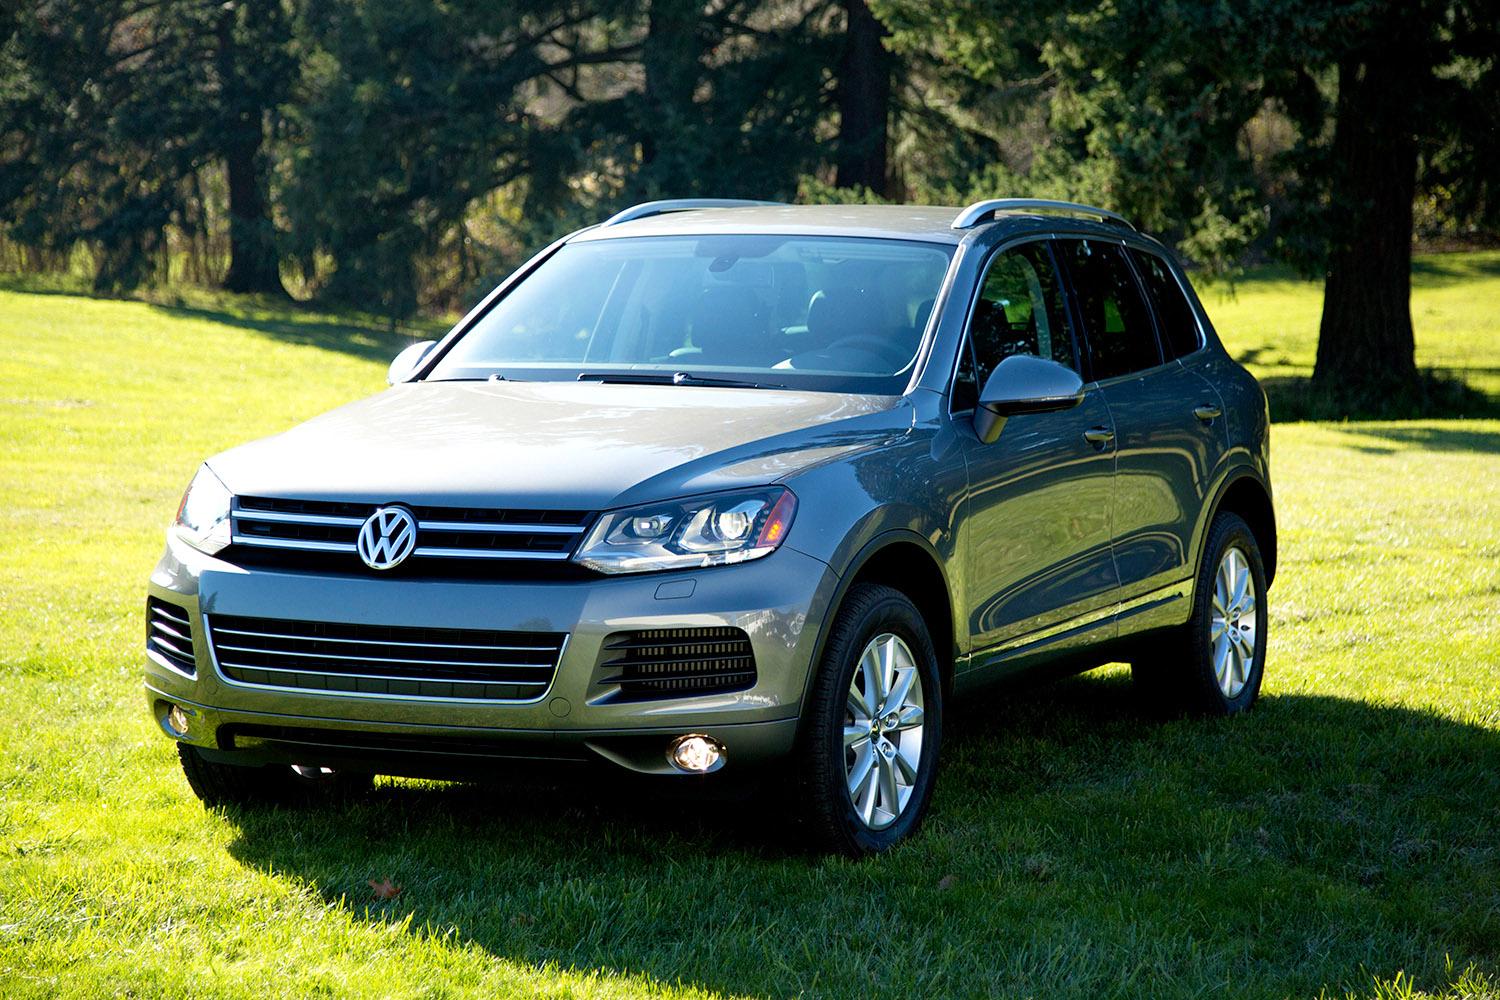 2015 Volkswagen Touareg Review & Ratings